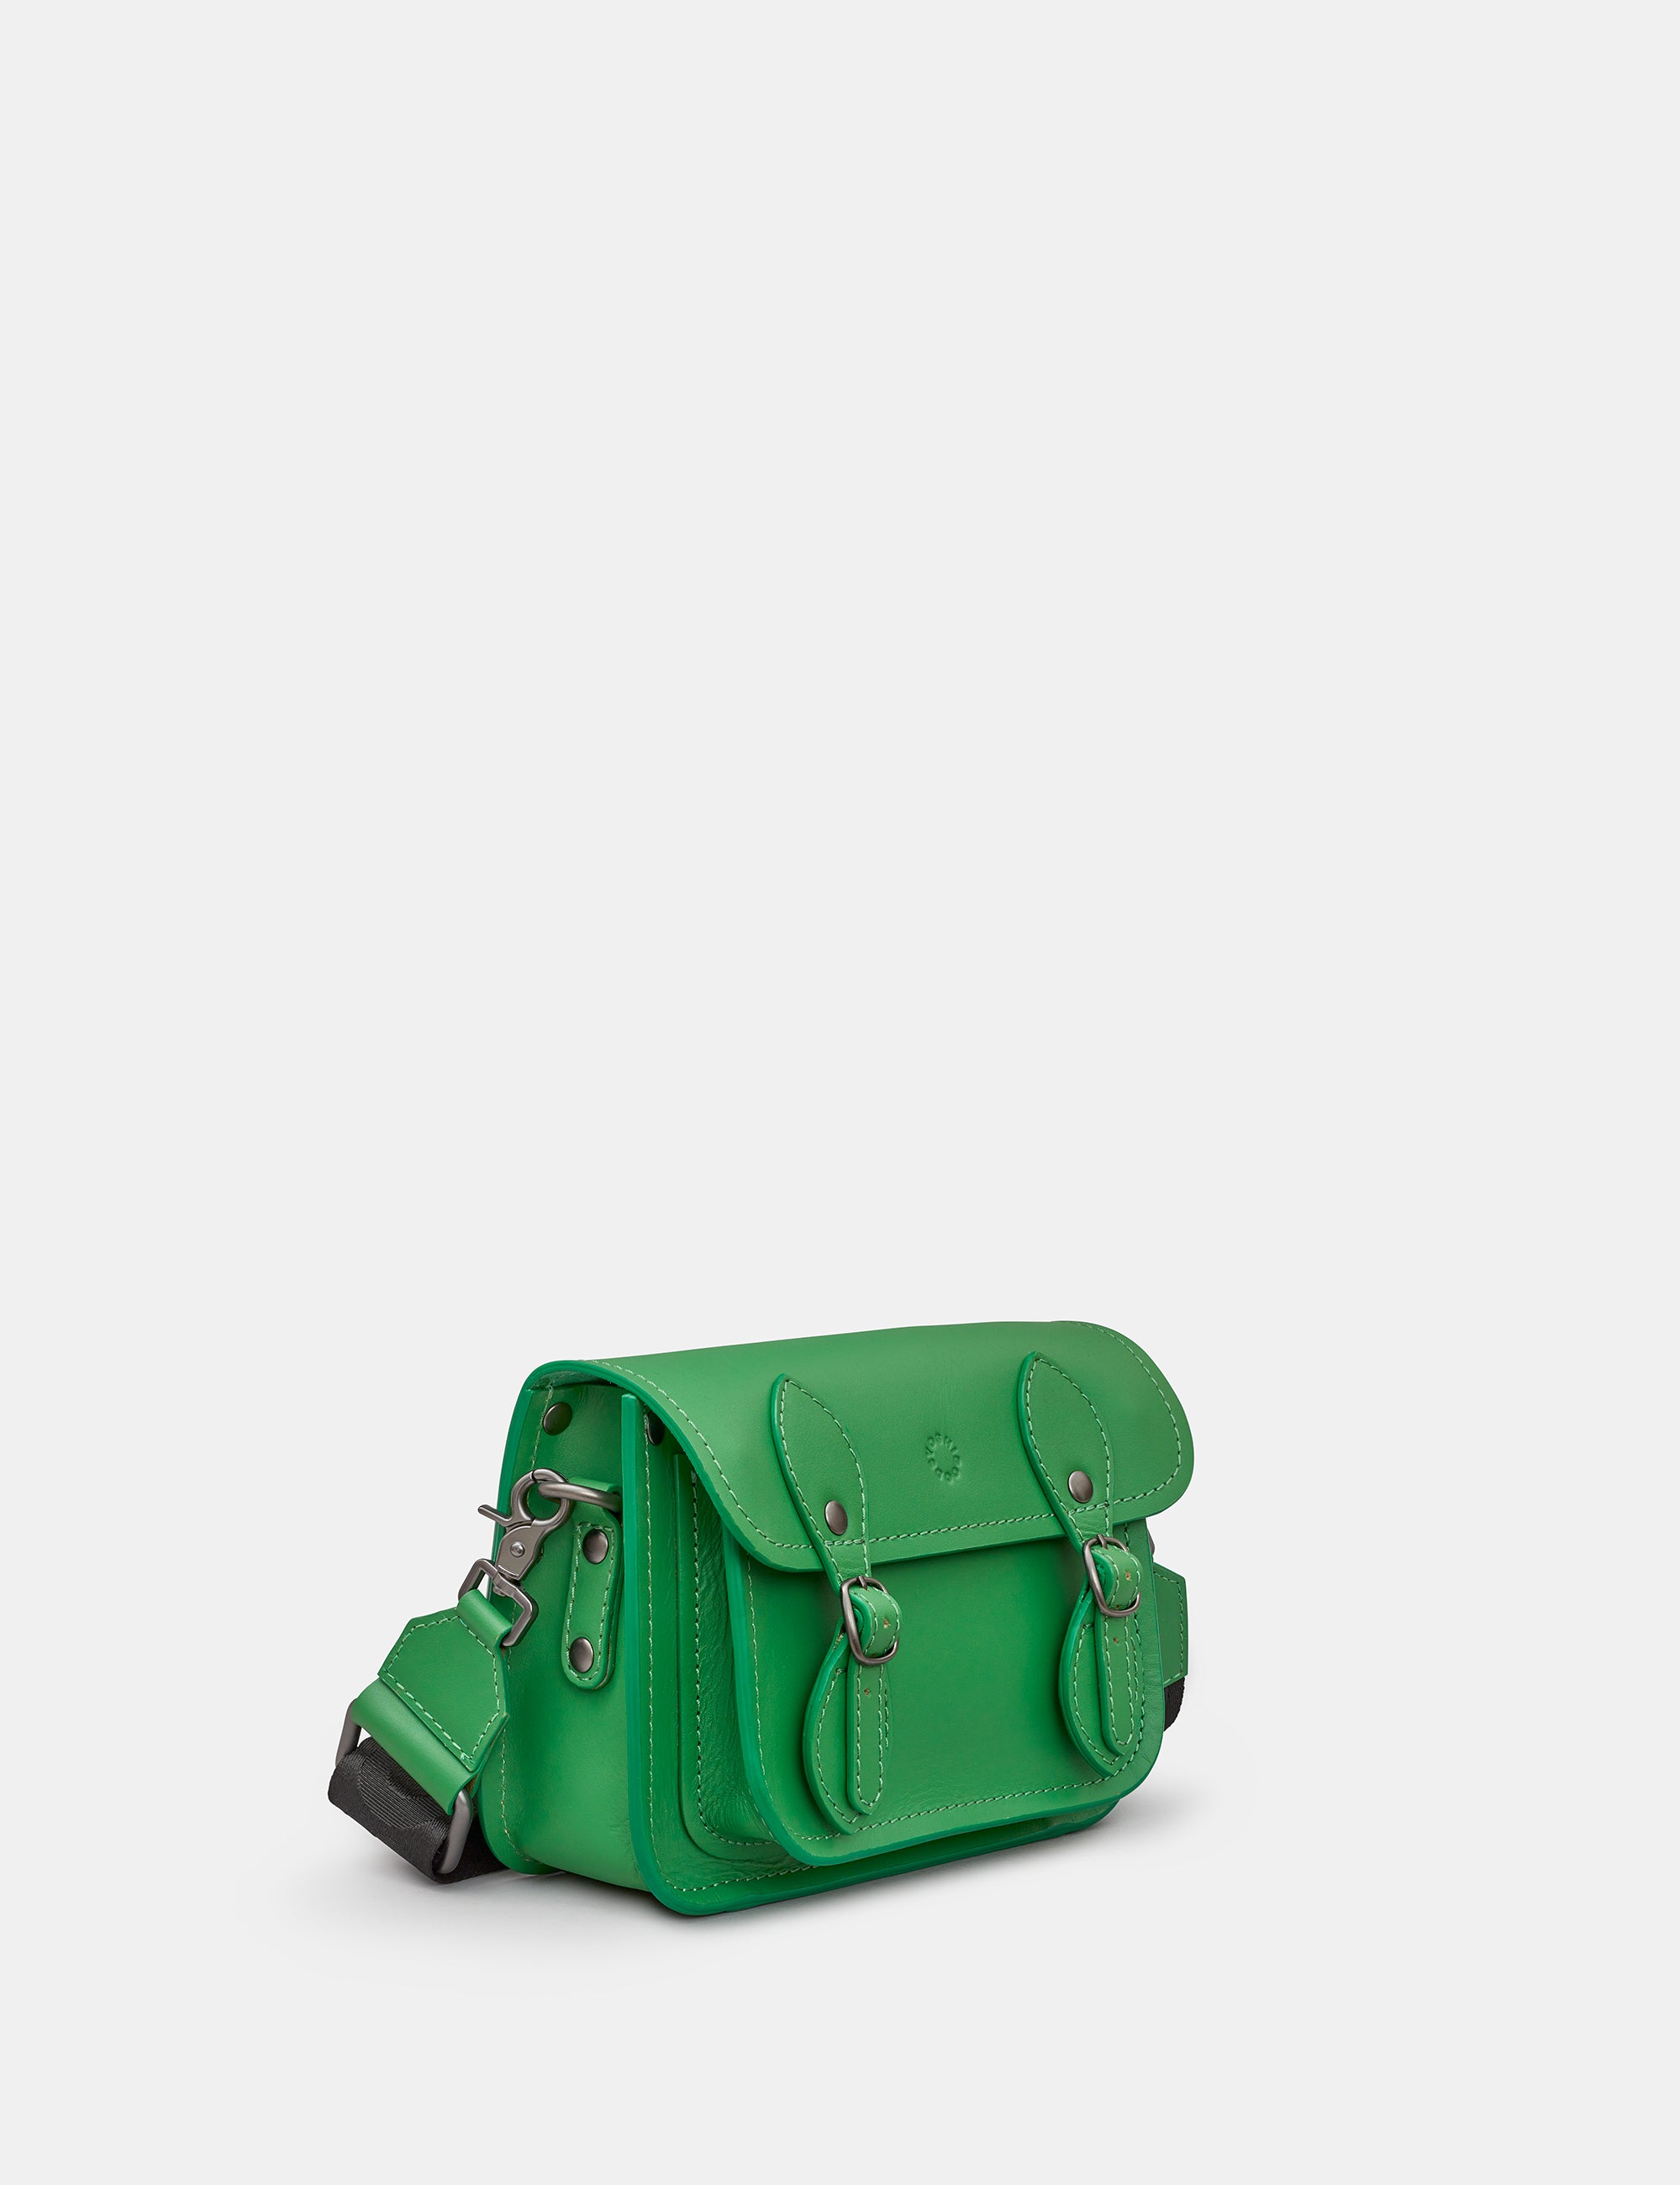 Tilney Green Leather Mini Satchel | Cross Body Bag | Handbag by Yoshi ...